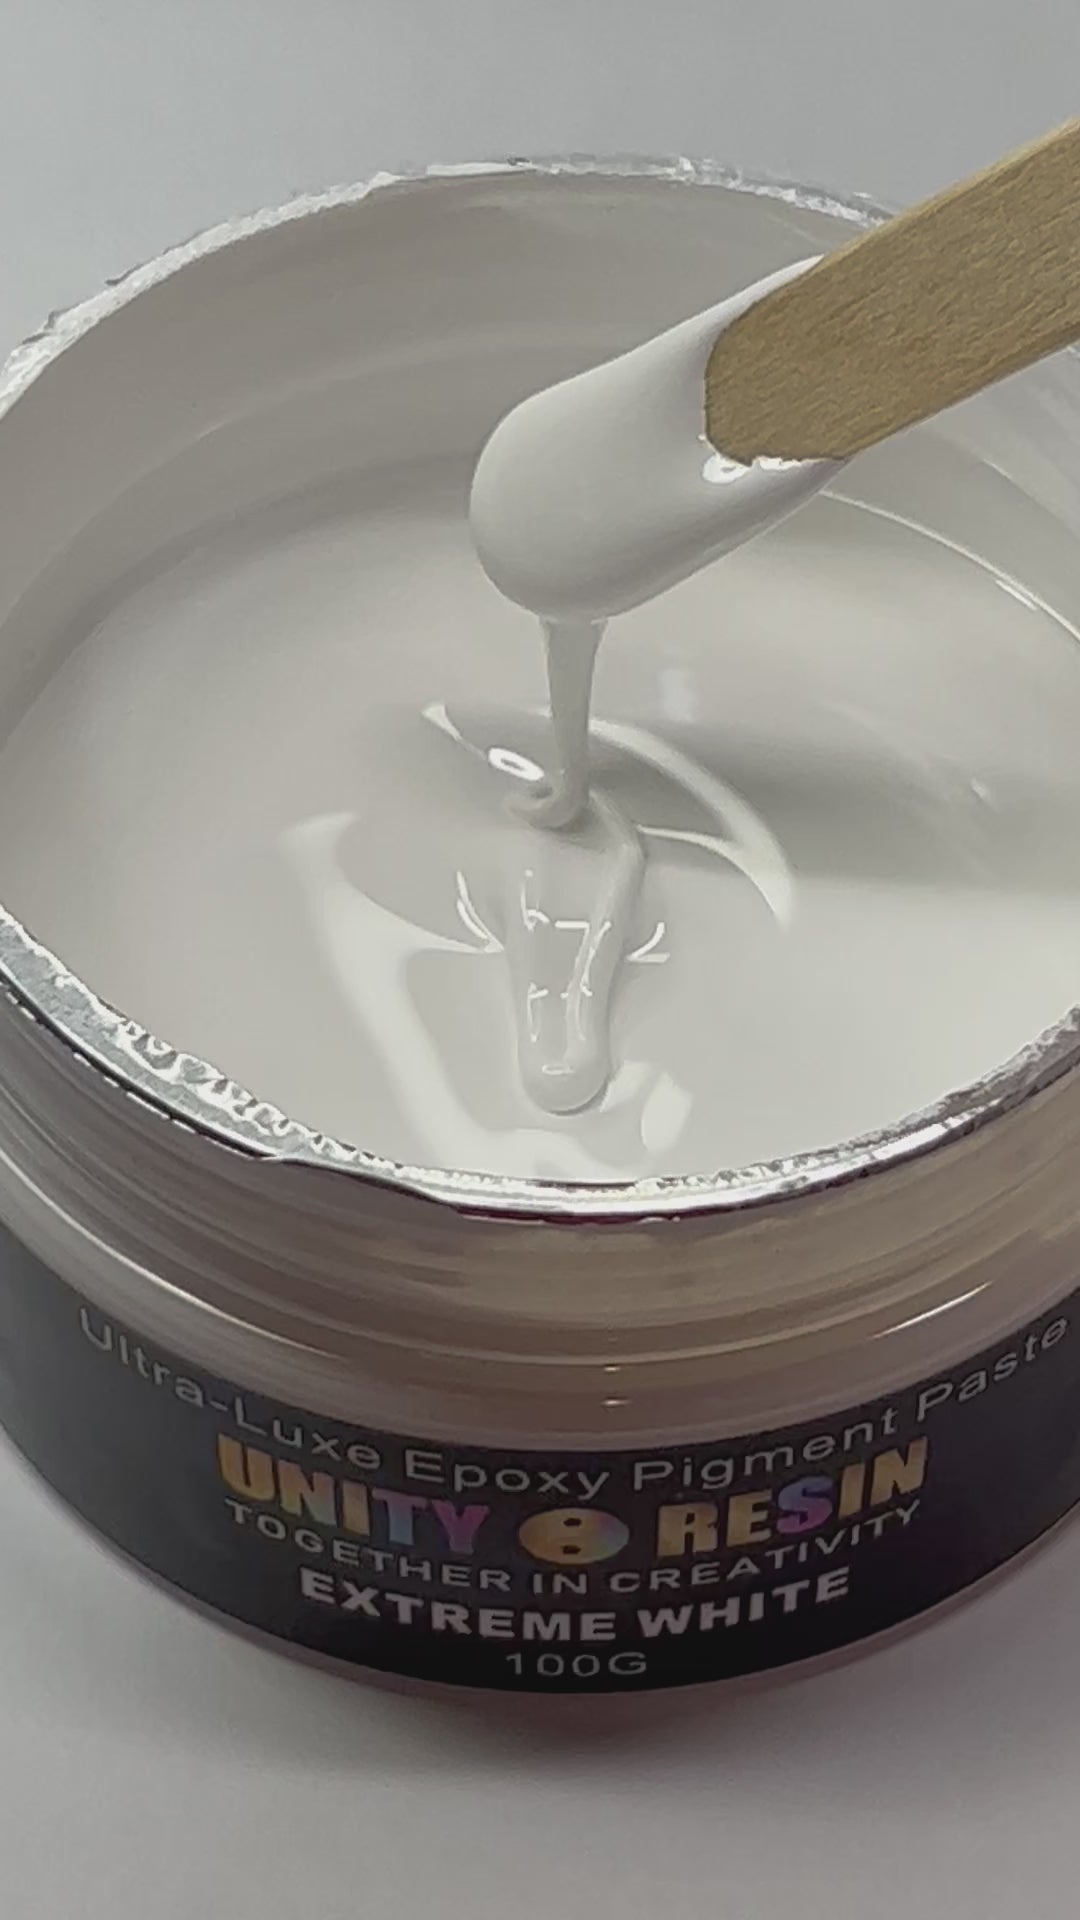 white resin, resin paint, resin wave white, white paint for resin waves, white mica powder for resin, epoxy resin art, gold pigment, white pigment paste, resin paste, epoxy paint, white pigment, white pigment for resin, white resin color, resin cells, resin art, resin supplies, epoxy resin, resin craft, white resin paint, white paint for resin, white mica powder for epoxy, white epoxy